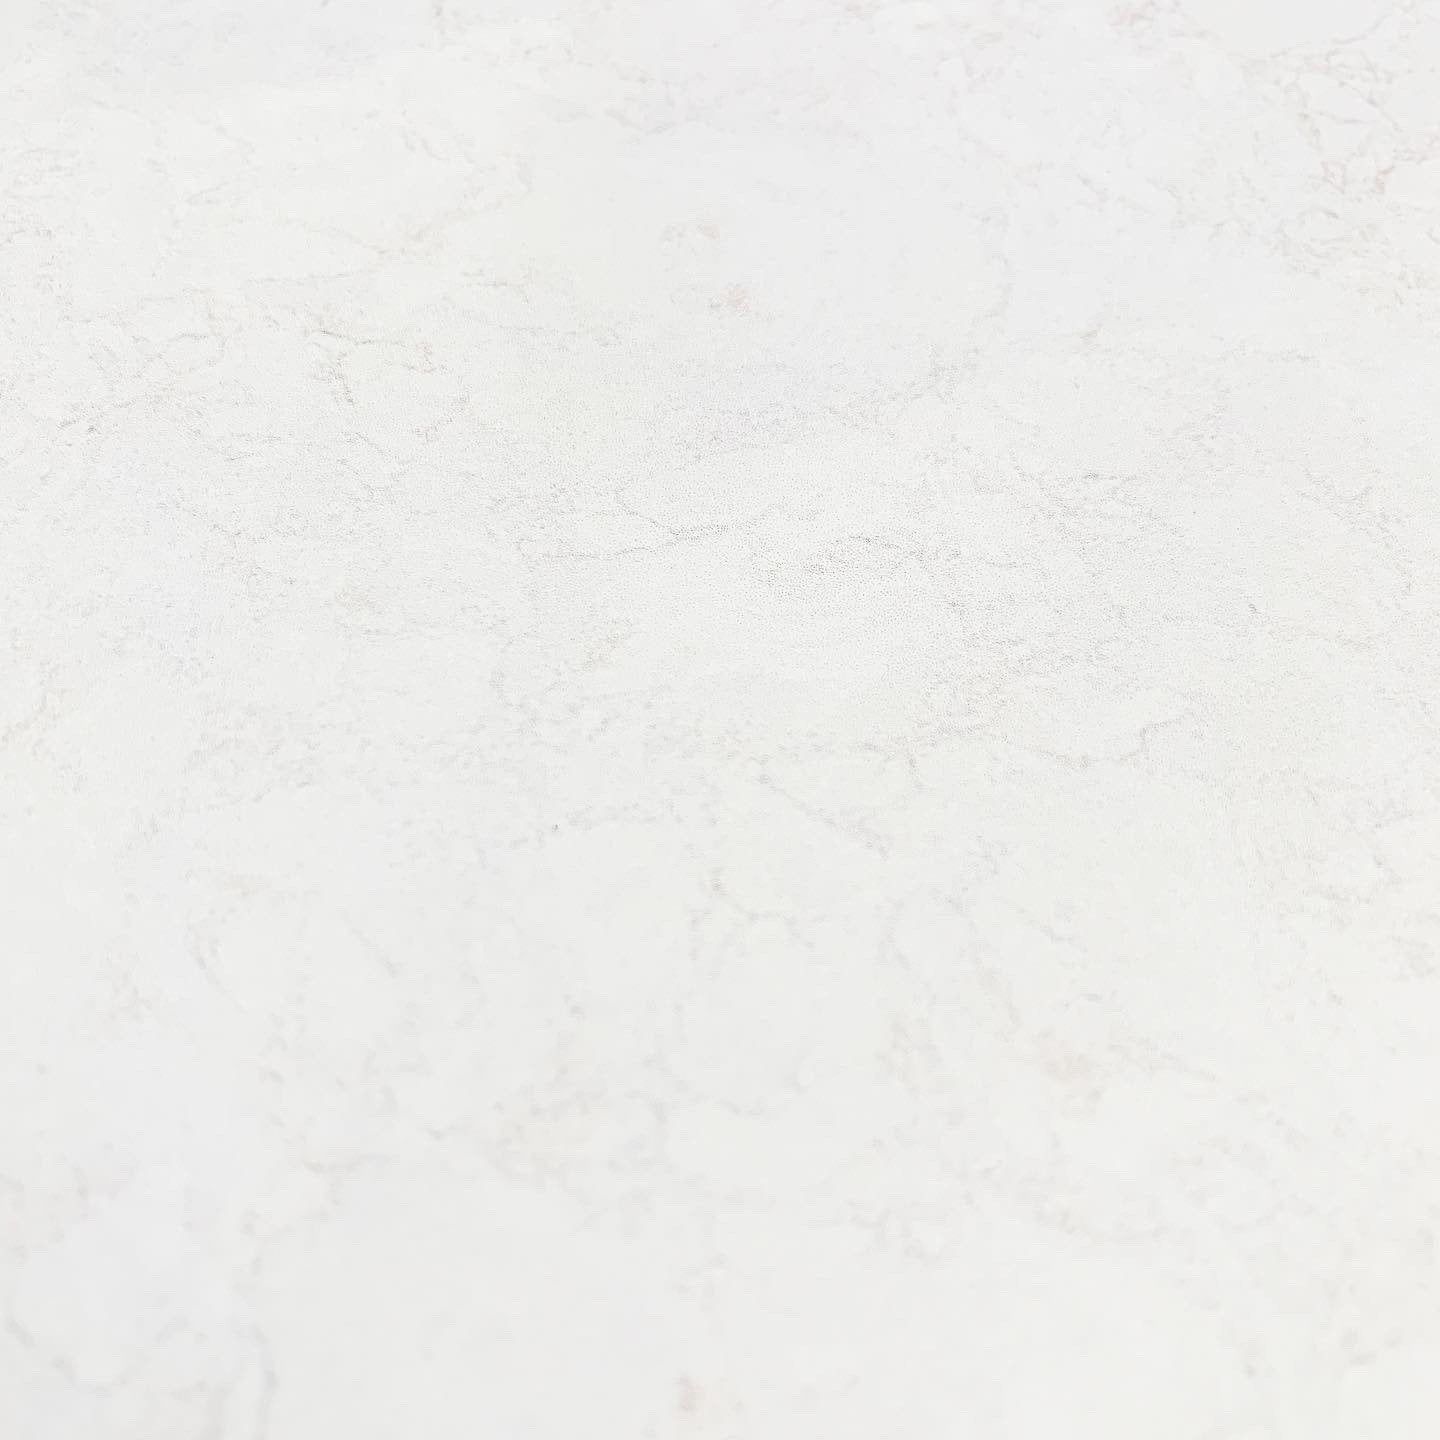 Vinyl Countertop Wrap, White and Tan Marble